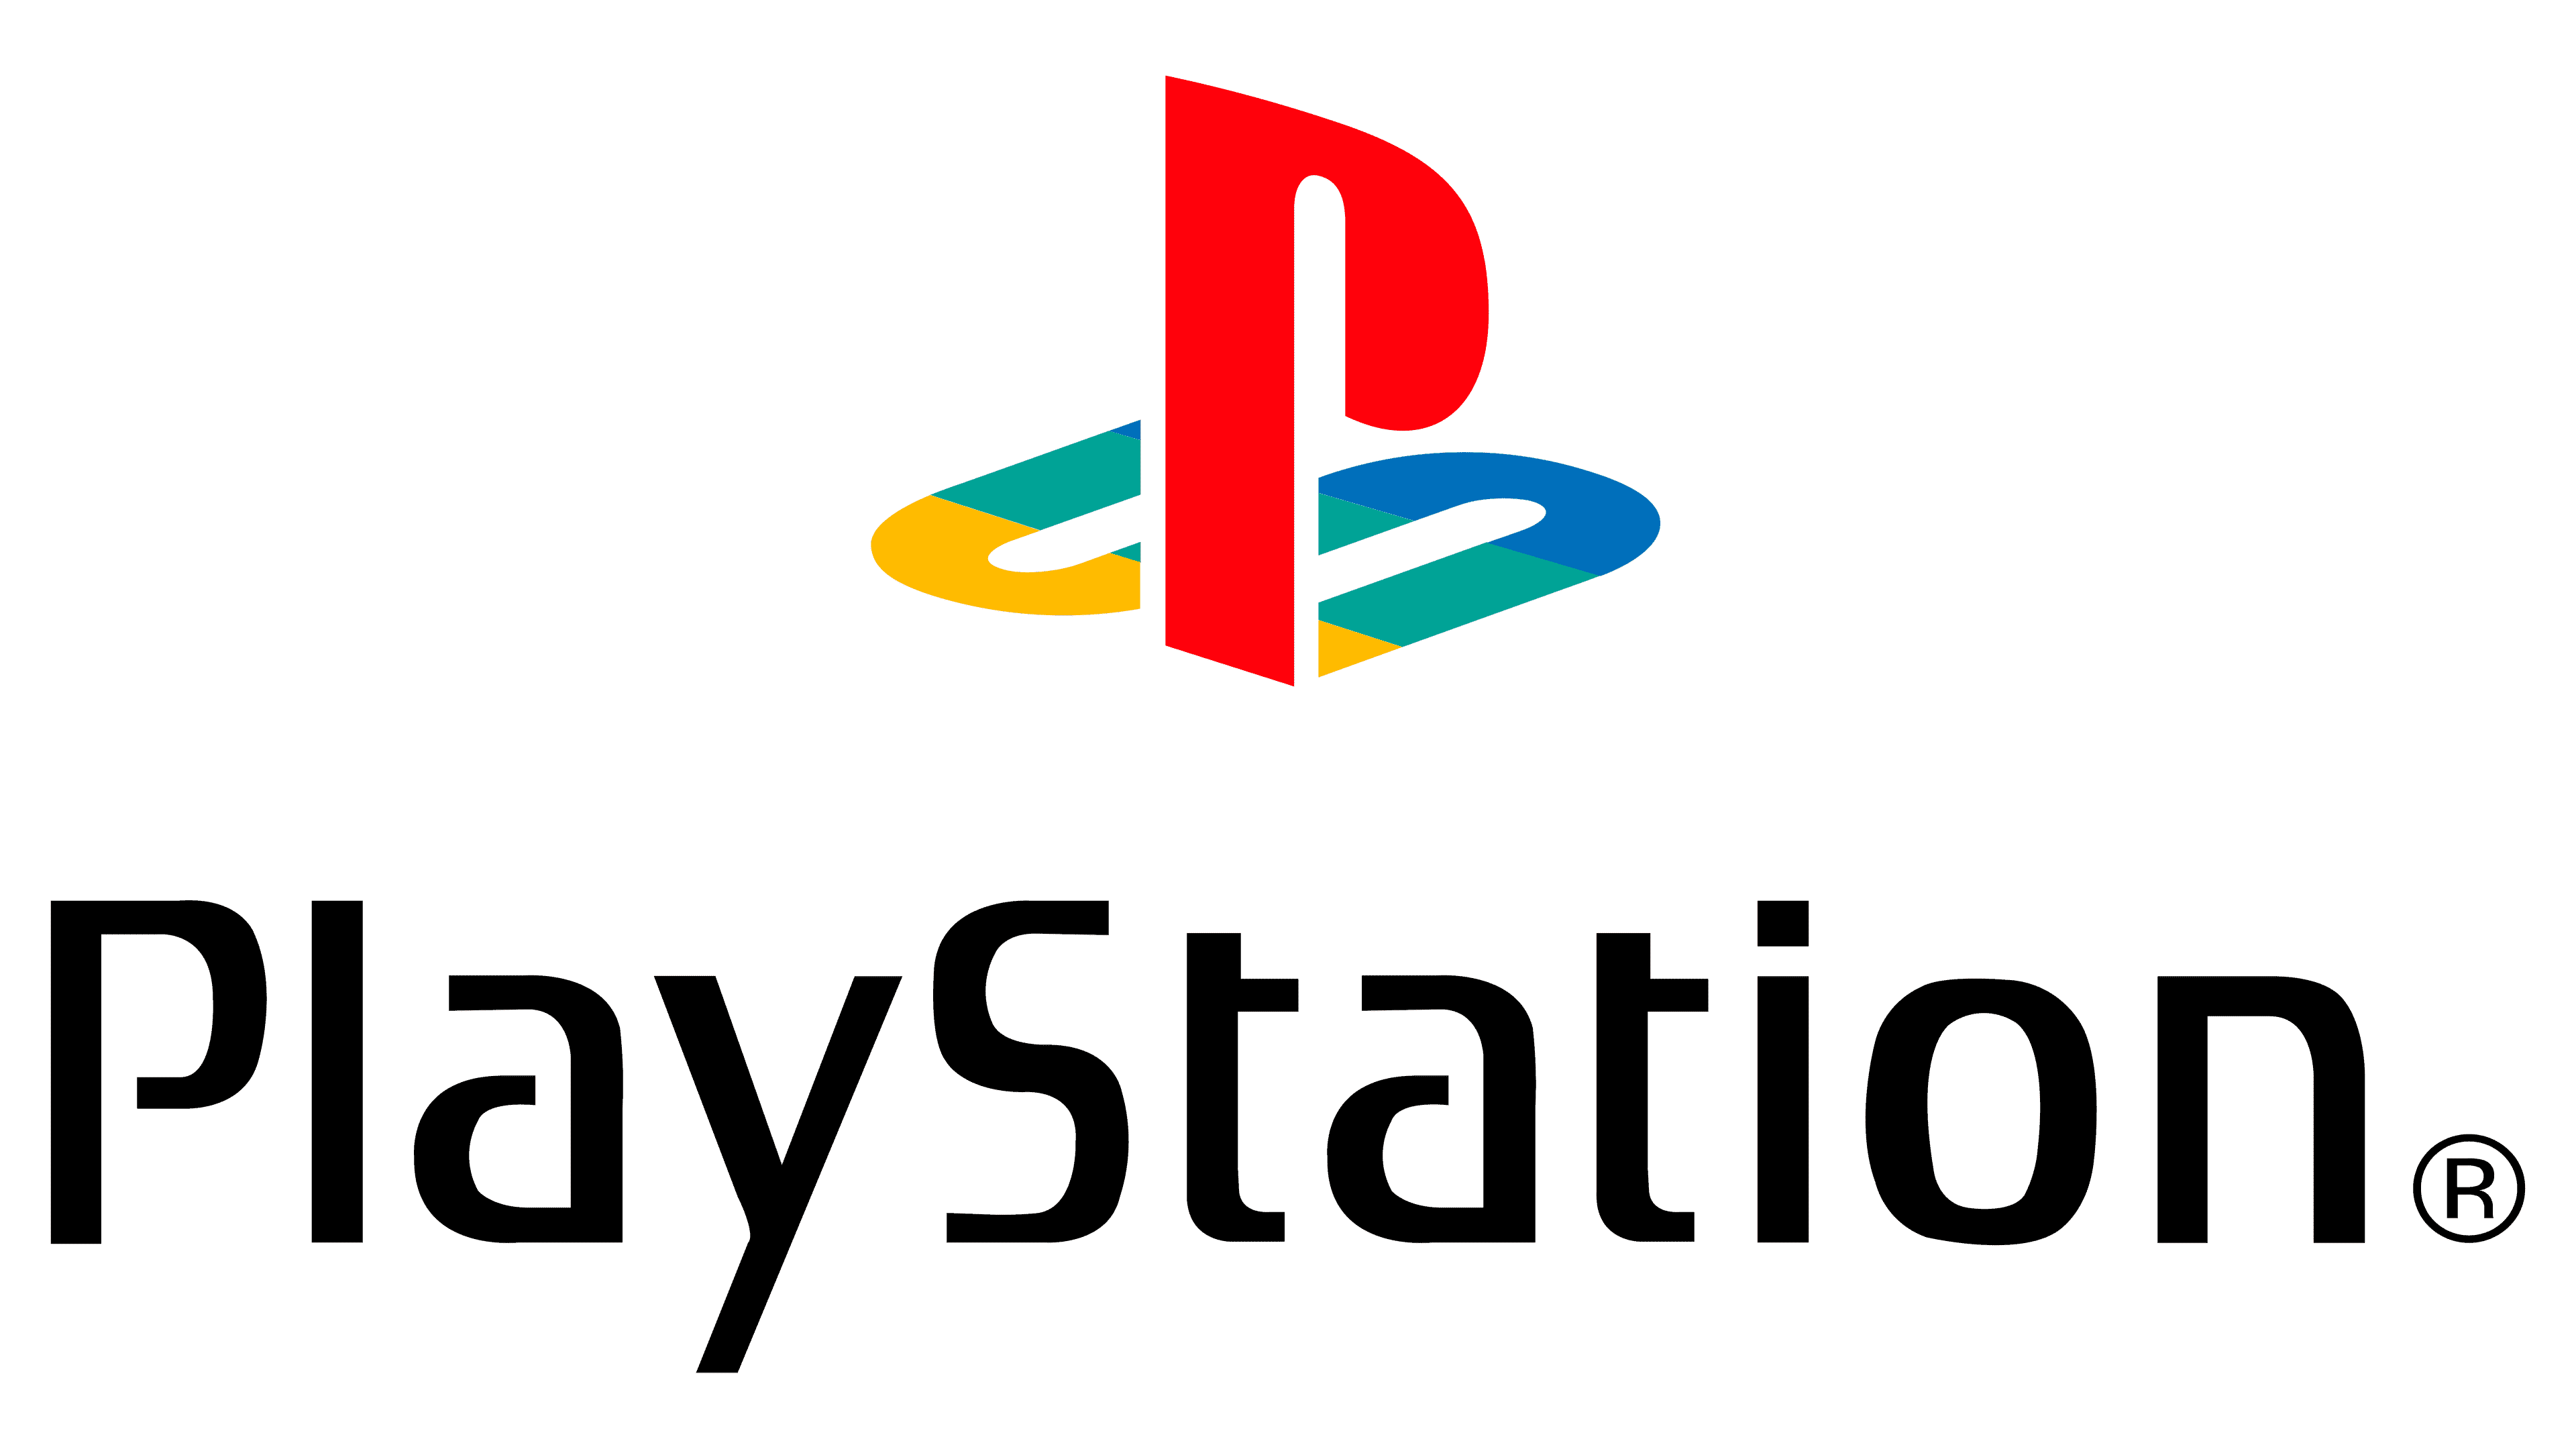 Sony ps1 logo. Консоль Sony PLAYSTATION лого. Sony PLAYSTATION логотип вектор. Логотип PLAYSTATION 1. Логотип пс